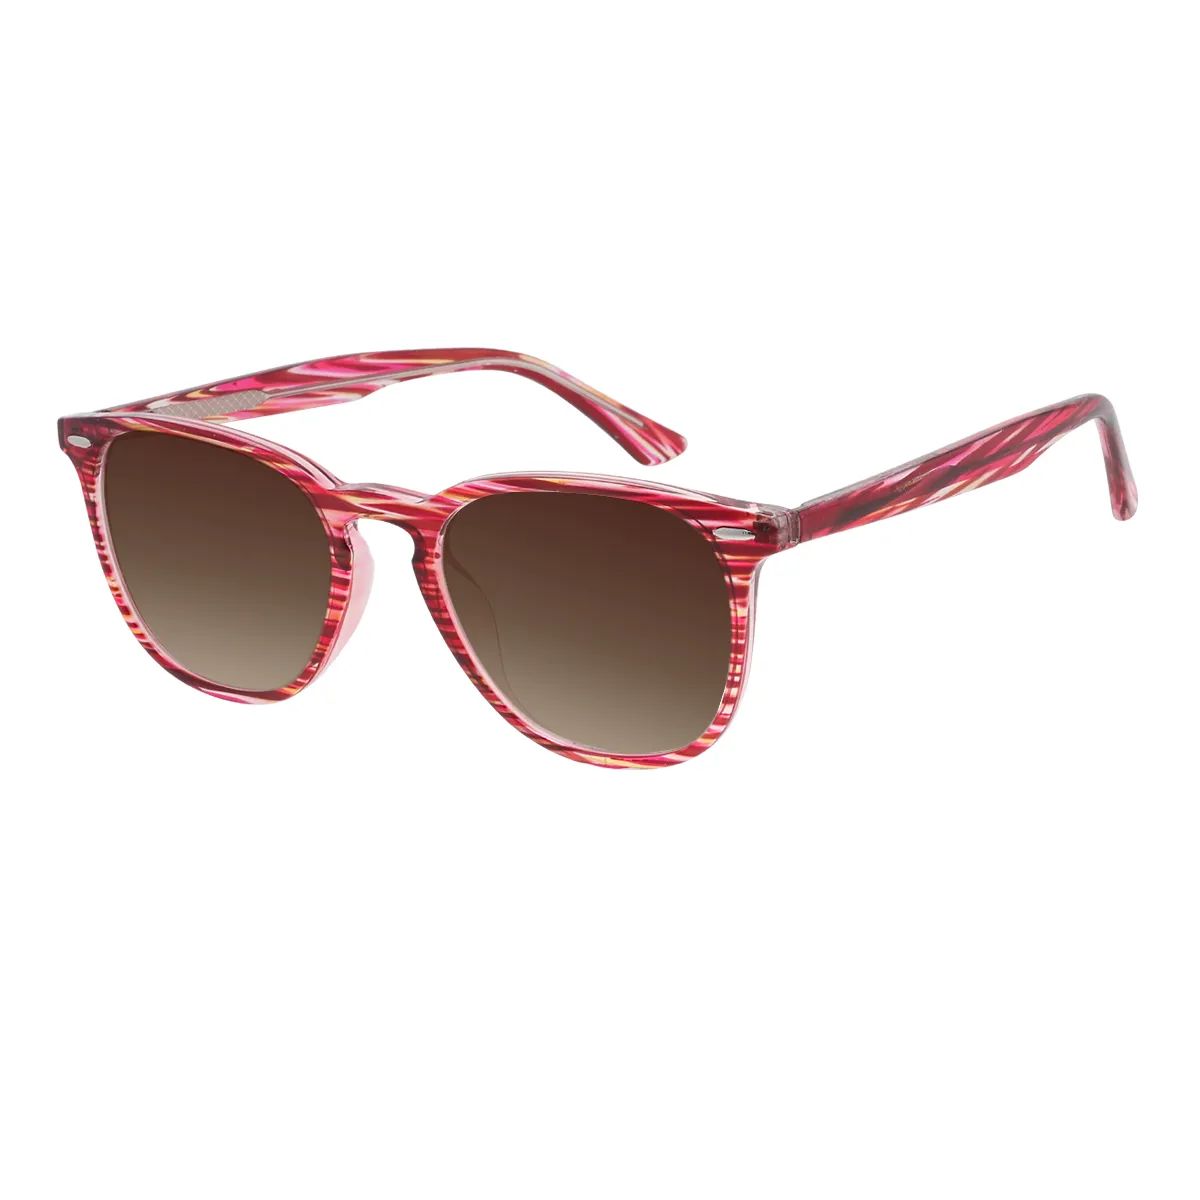 Dobbins - Square Red Sunglasses for Men & Women